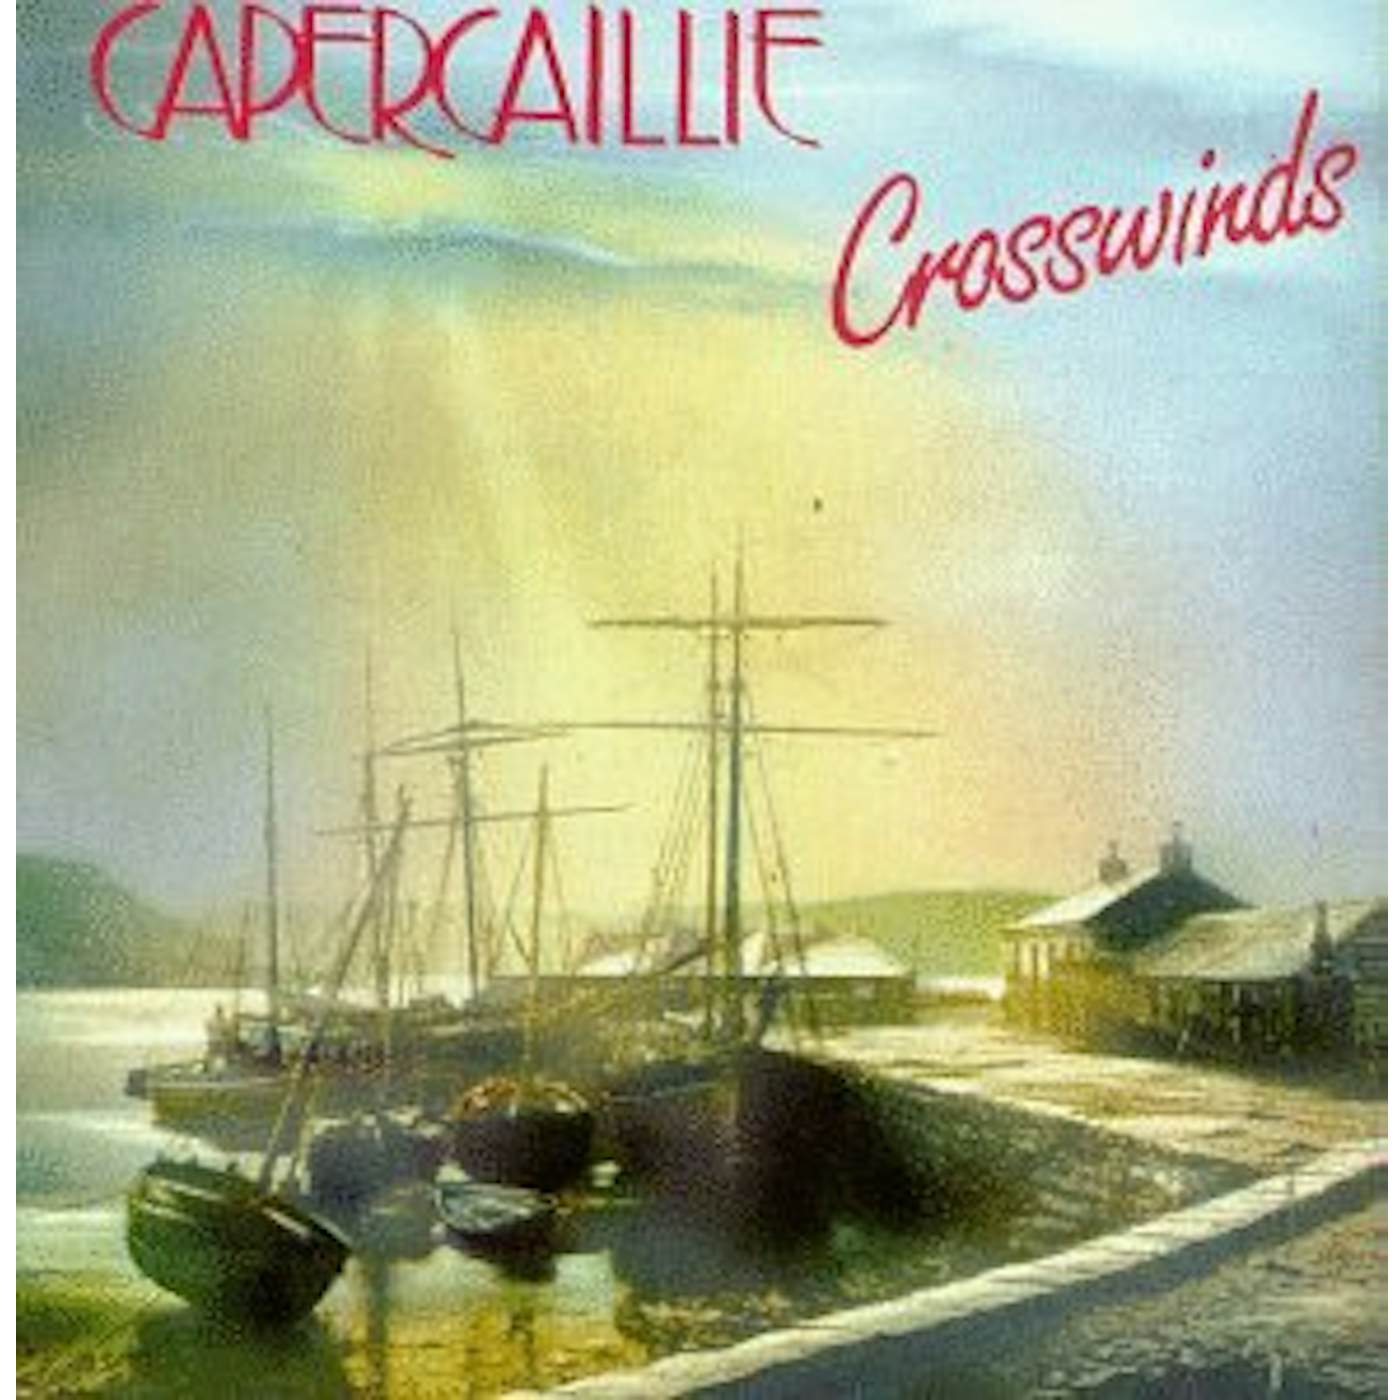 Capercaillie CROSSWINDS CD